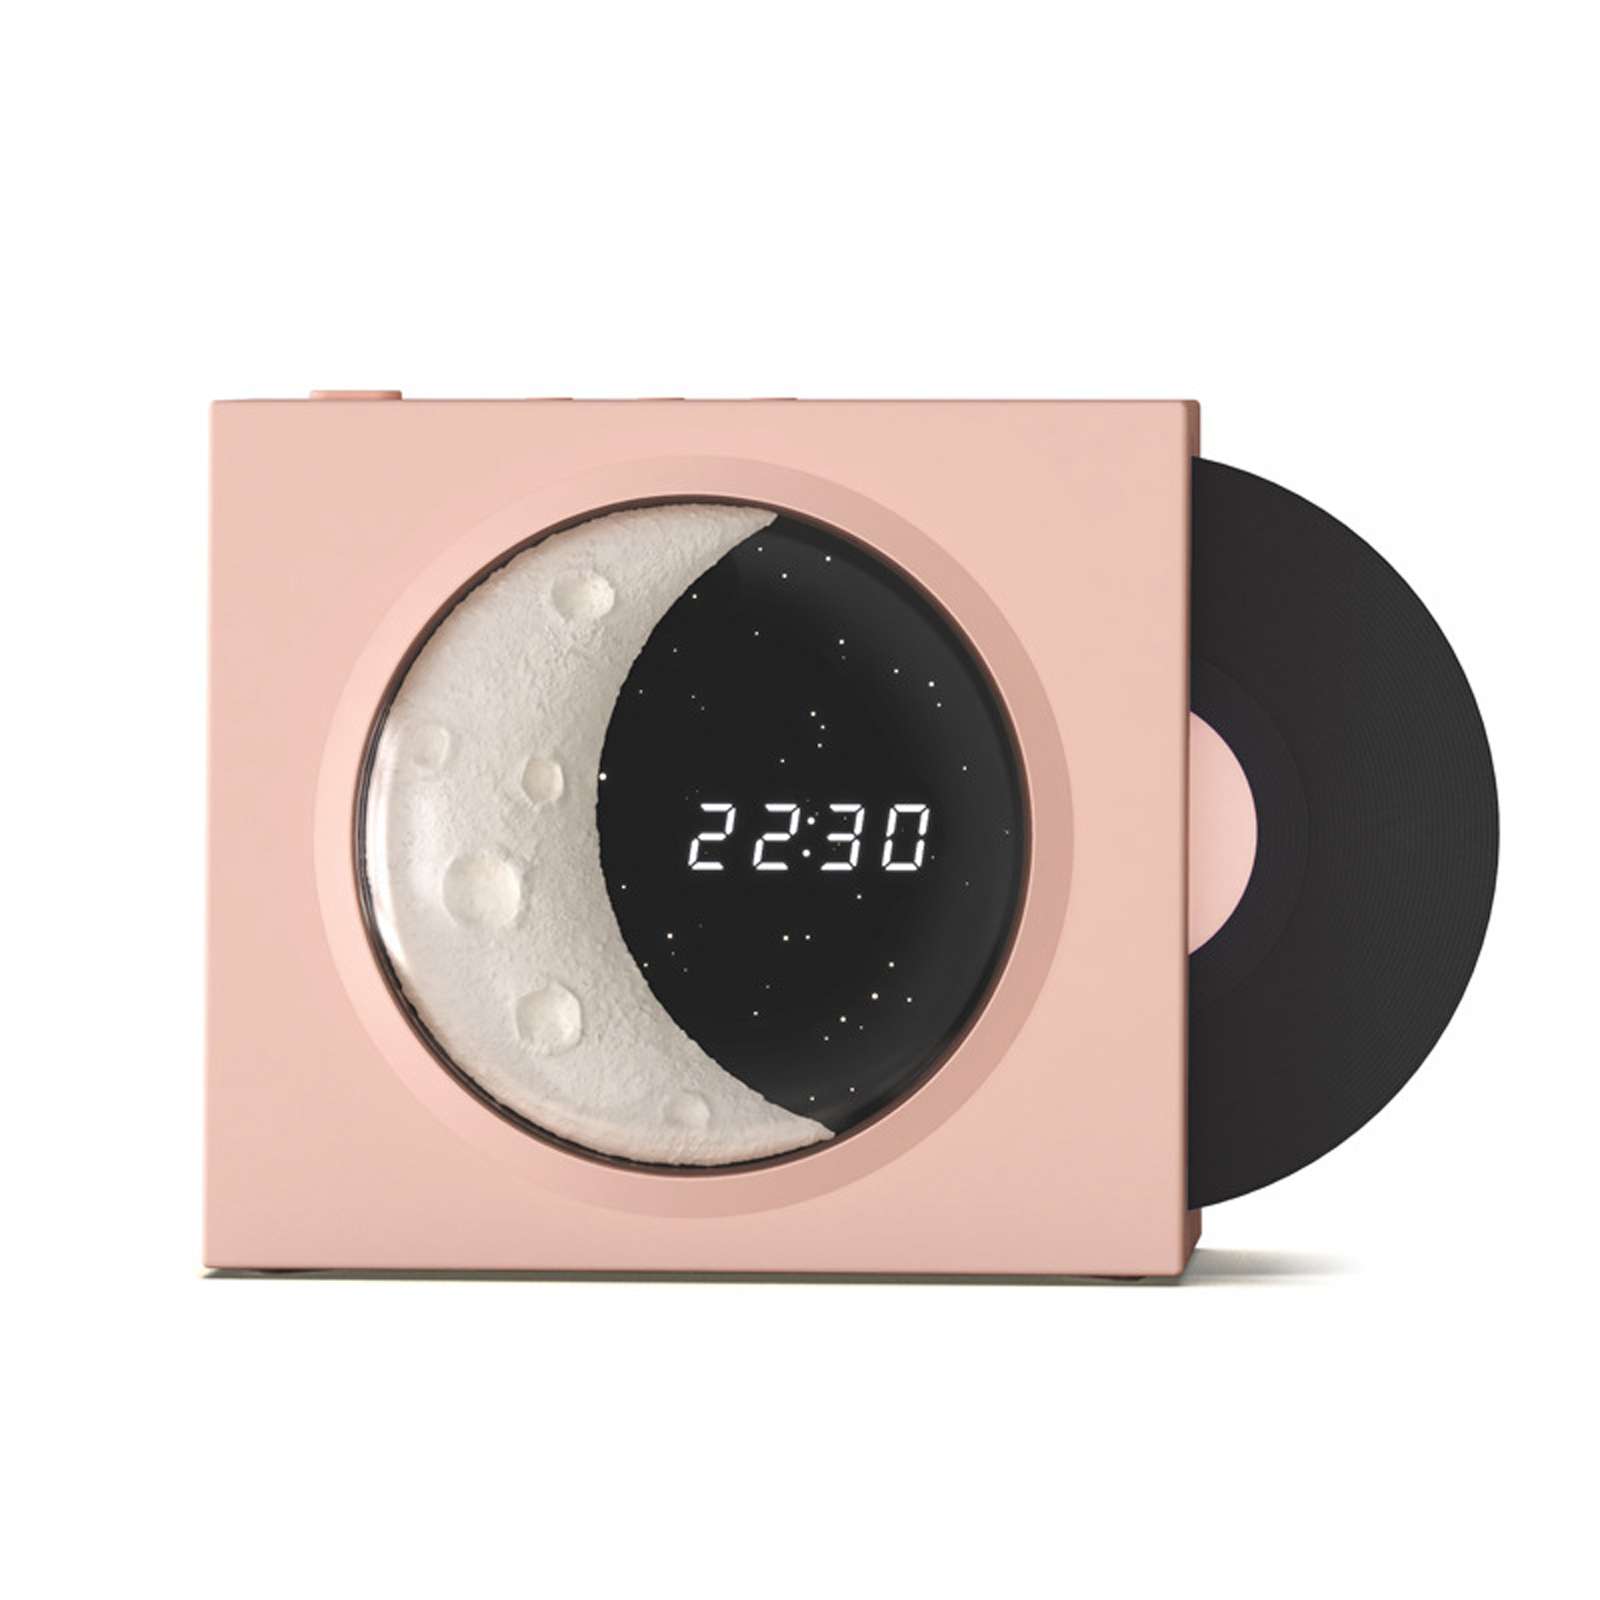 X09 Moon Clock Speaker Hifi Bluetooth Player Vinyl Nostalgia Large Volume Desktop Outdoor Small Audio